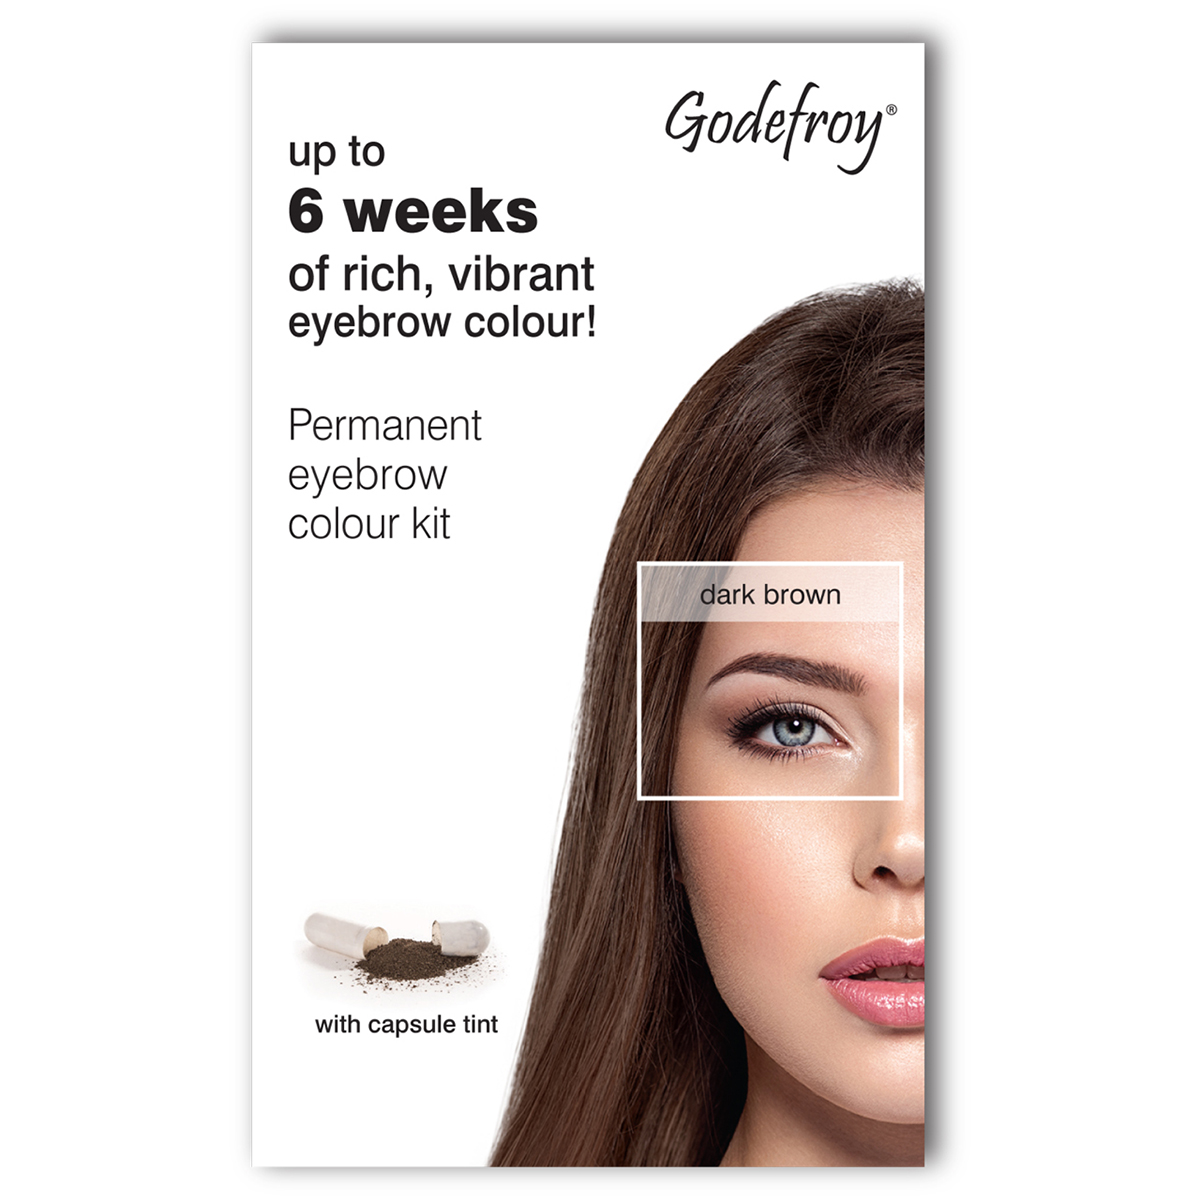 Godefroy Instant Eyebrow Tint